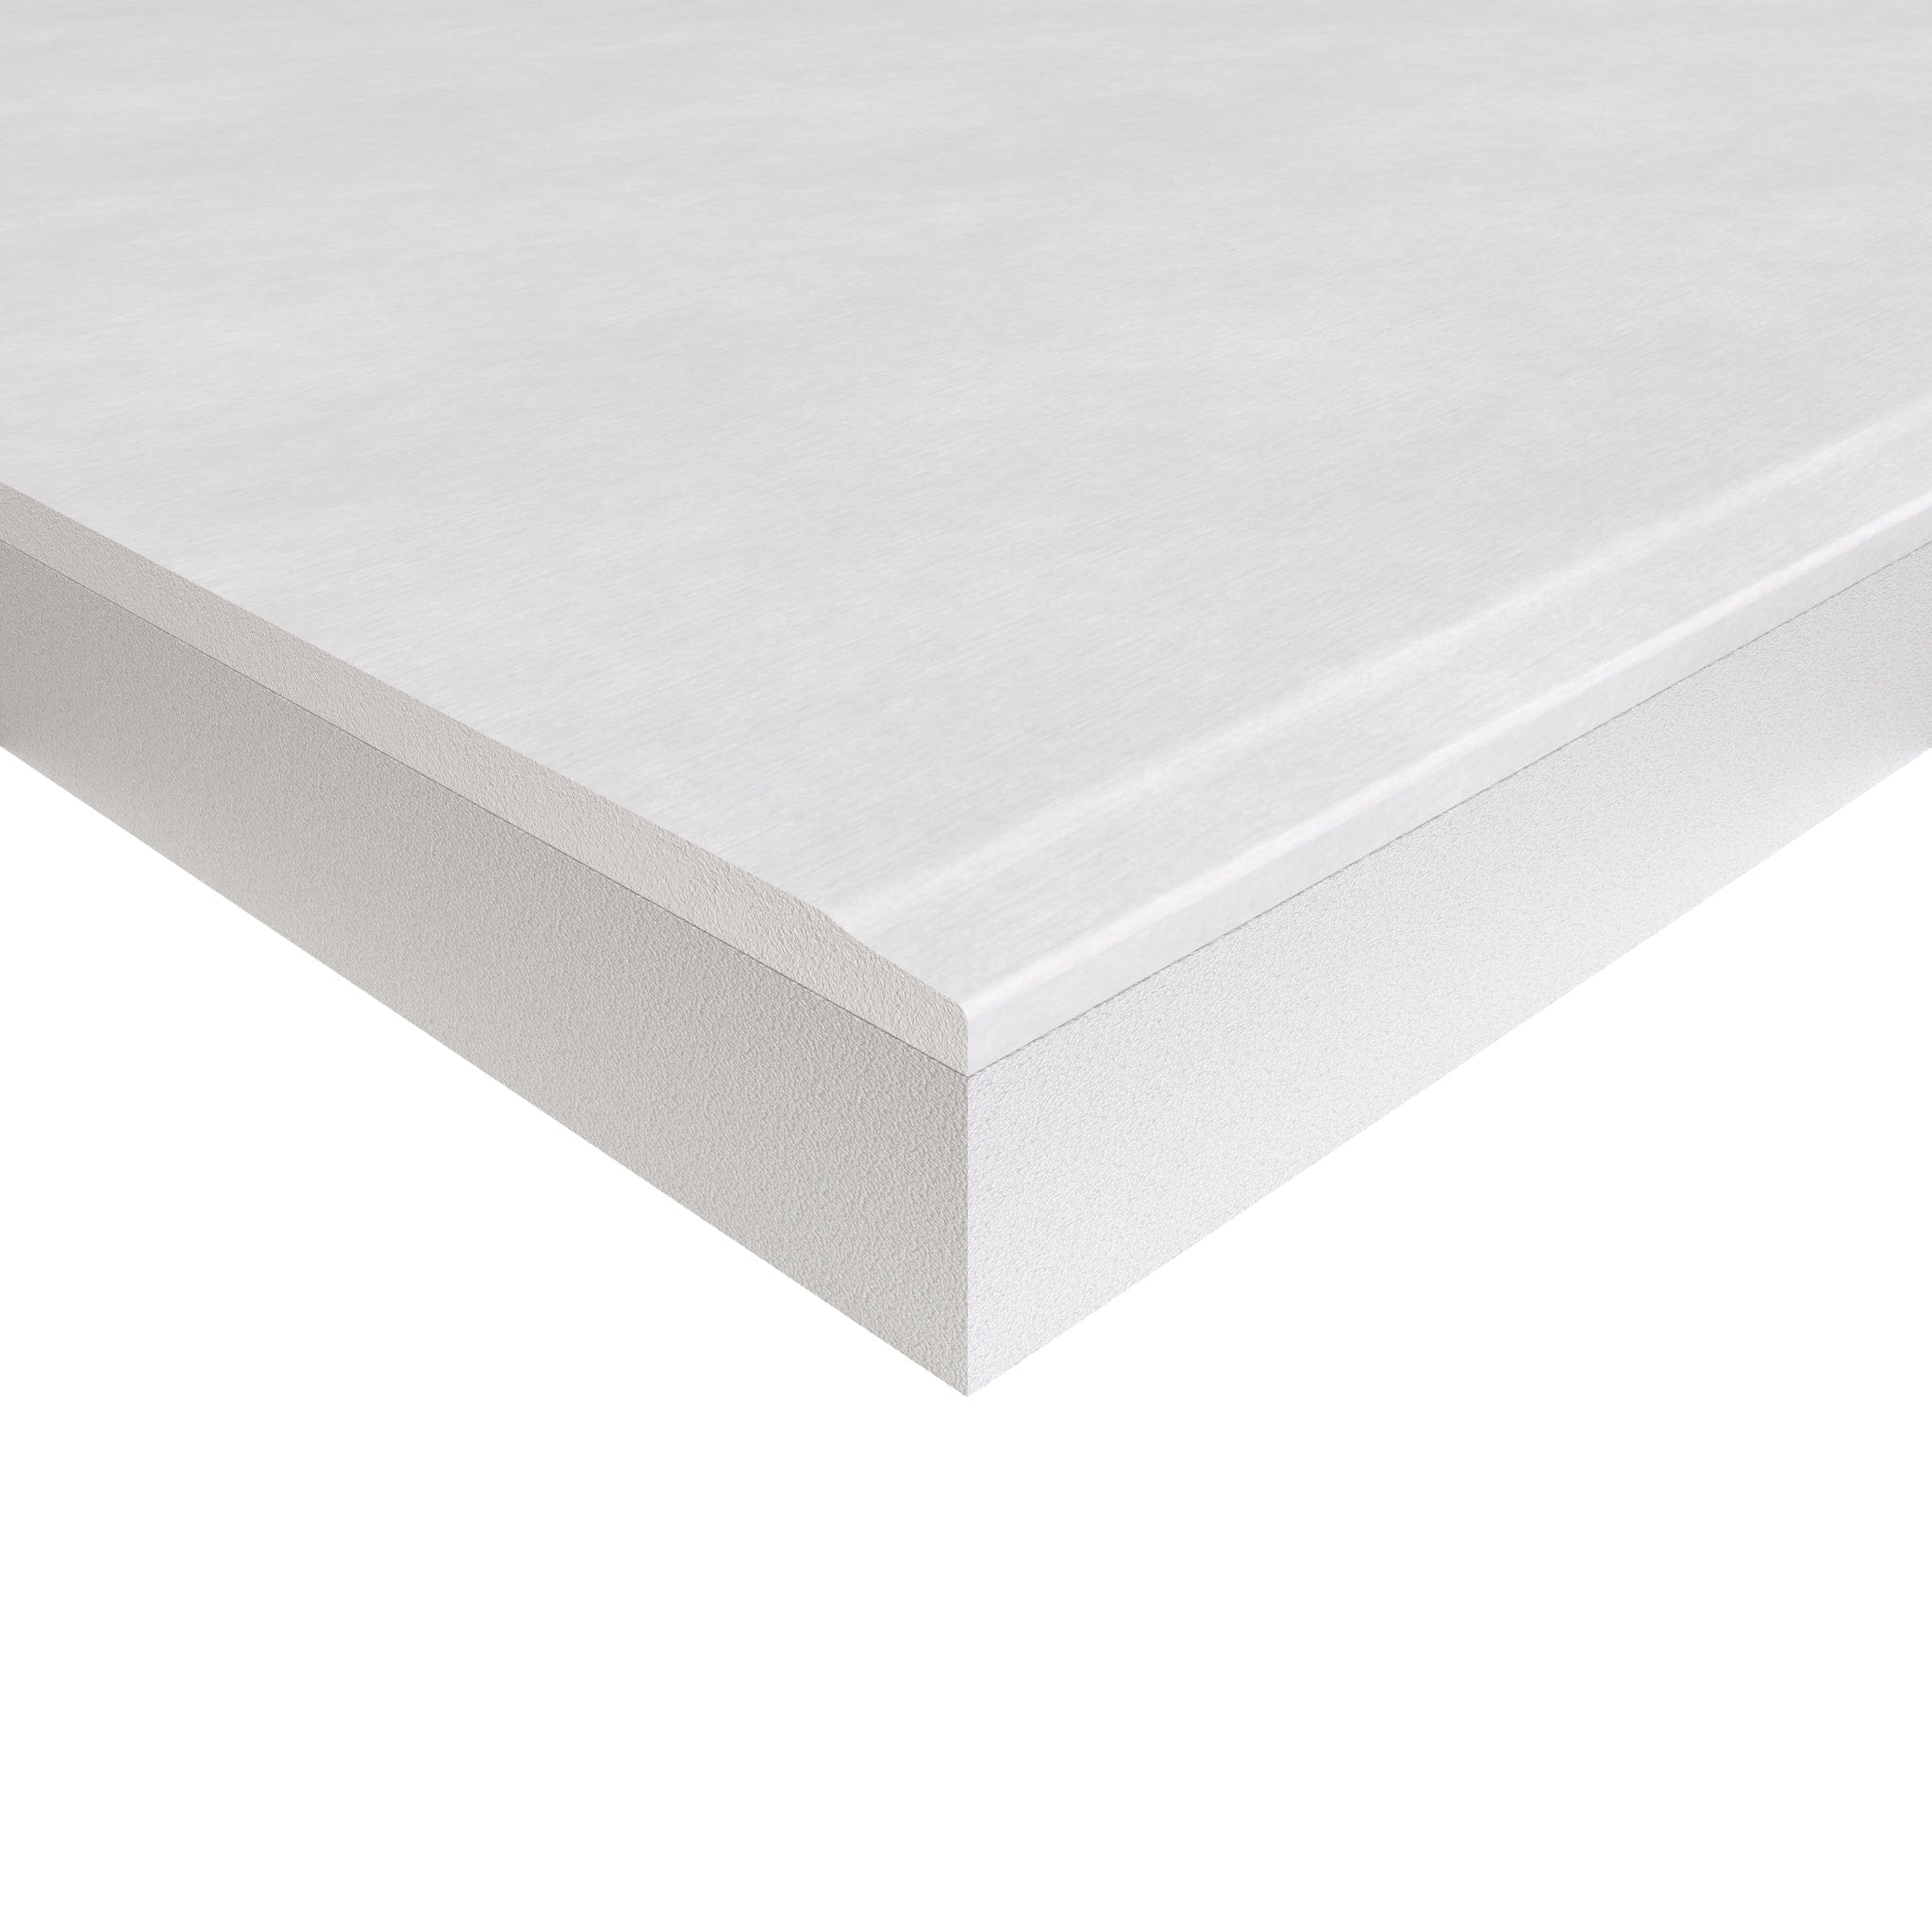 Tekwarm Insulation 22.5mm - Pallet of 40 Boards Tekwarm Thermal Basic Board | 2400mm x 1200mm - Bulk Buy BM02060 Tekwarm Thermal Basic Board 2400mm x 1200mm - Bulk Buy | insulationuk.co.uk